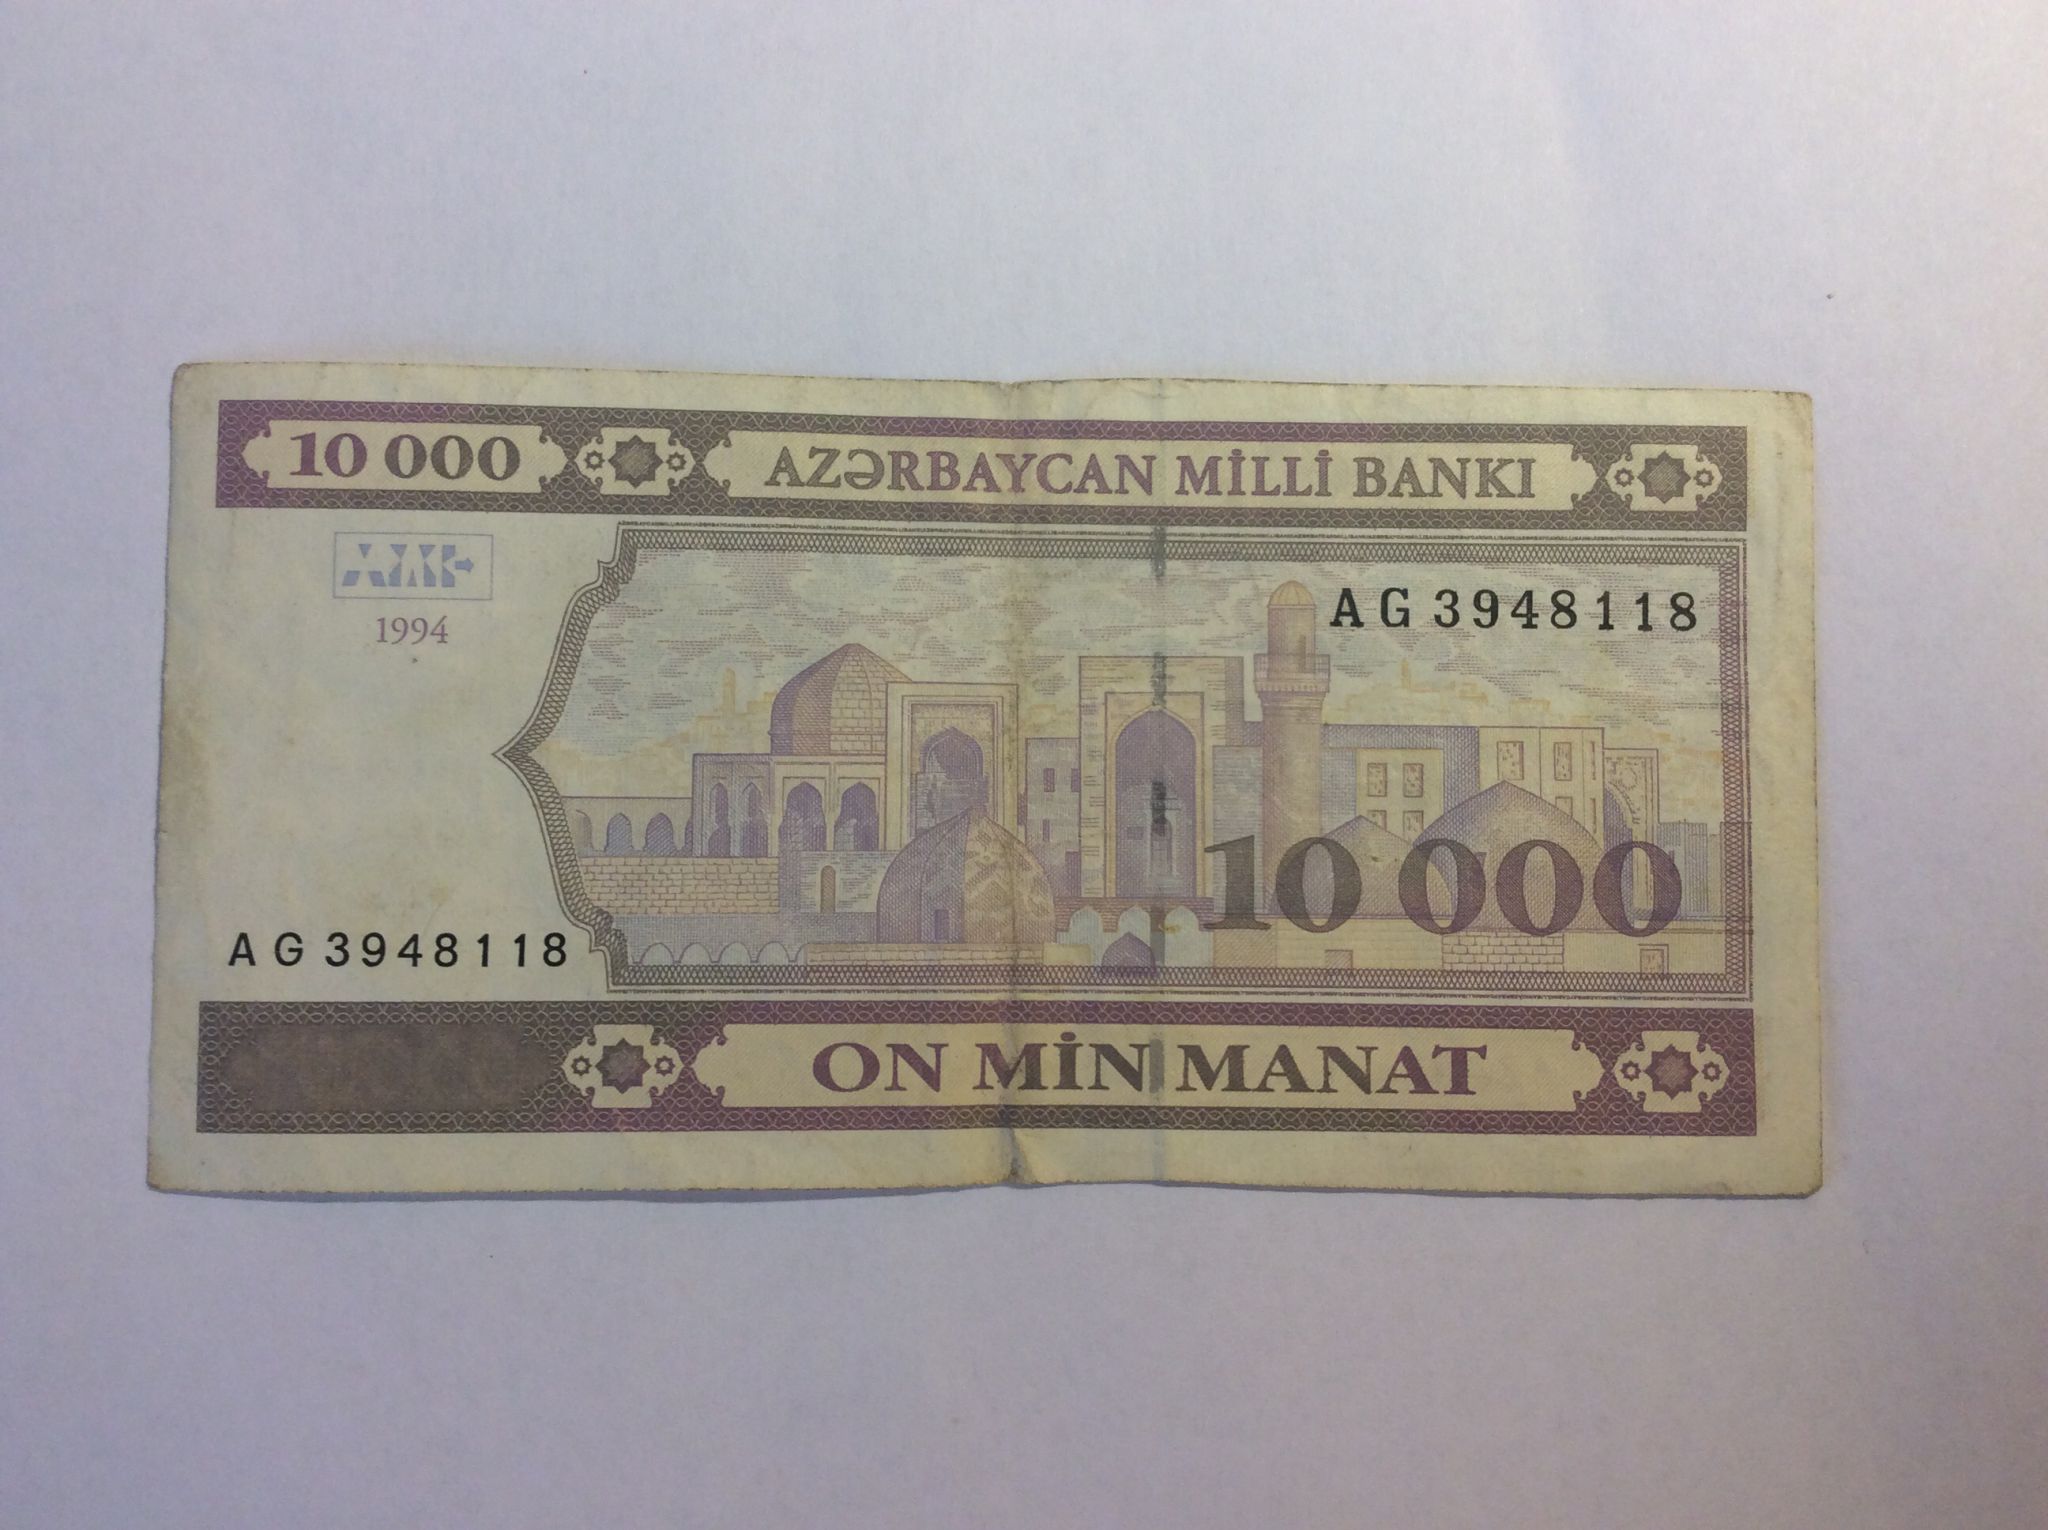 1500 рублей в манатах. 10000 Манат. 10000 Манатов 1994 года Азербайджан. Азербайджанский манат 10000. 1000 Манат 1994.